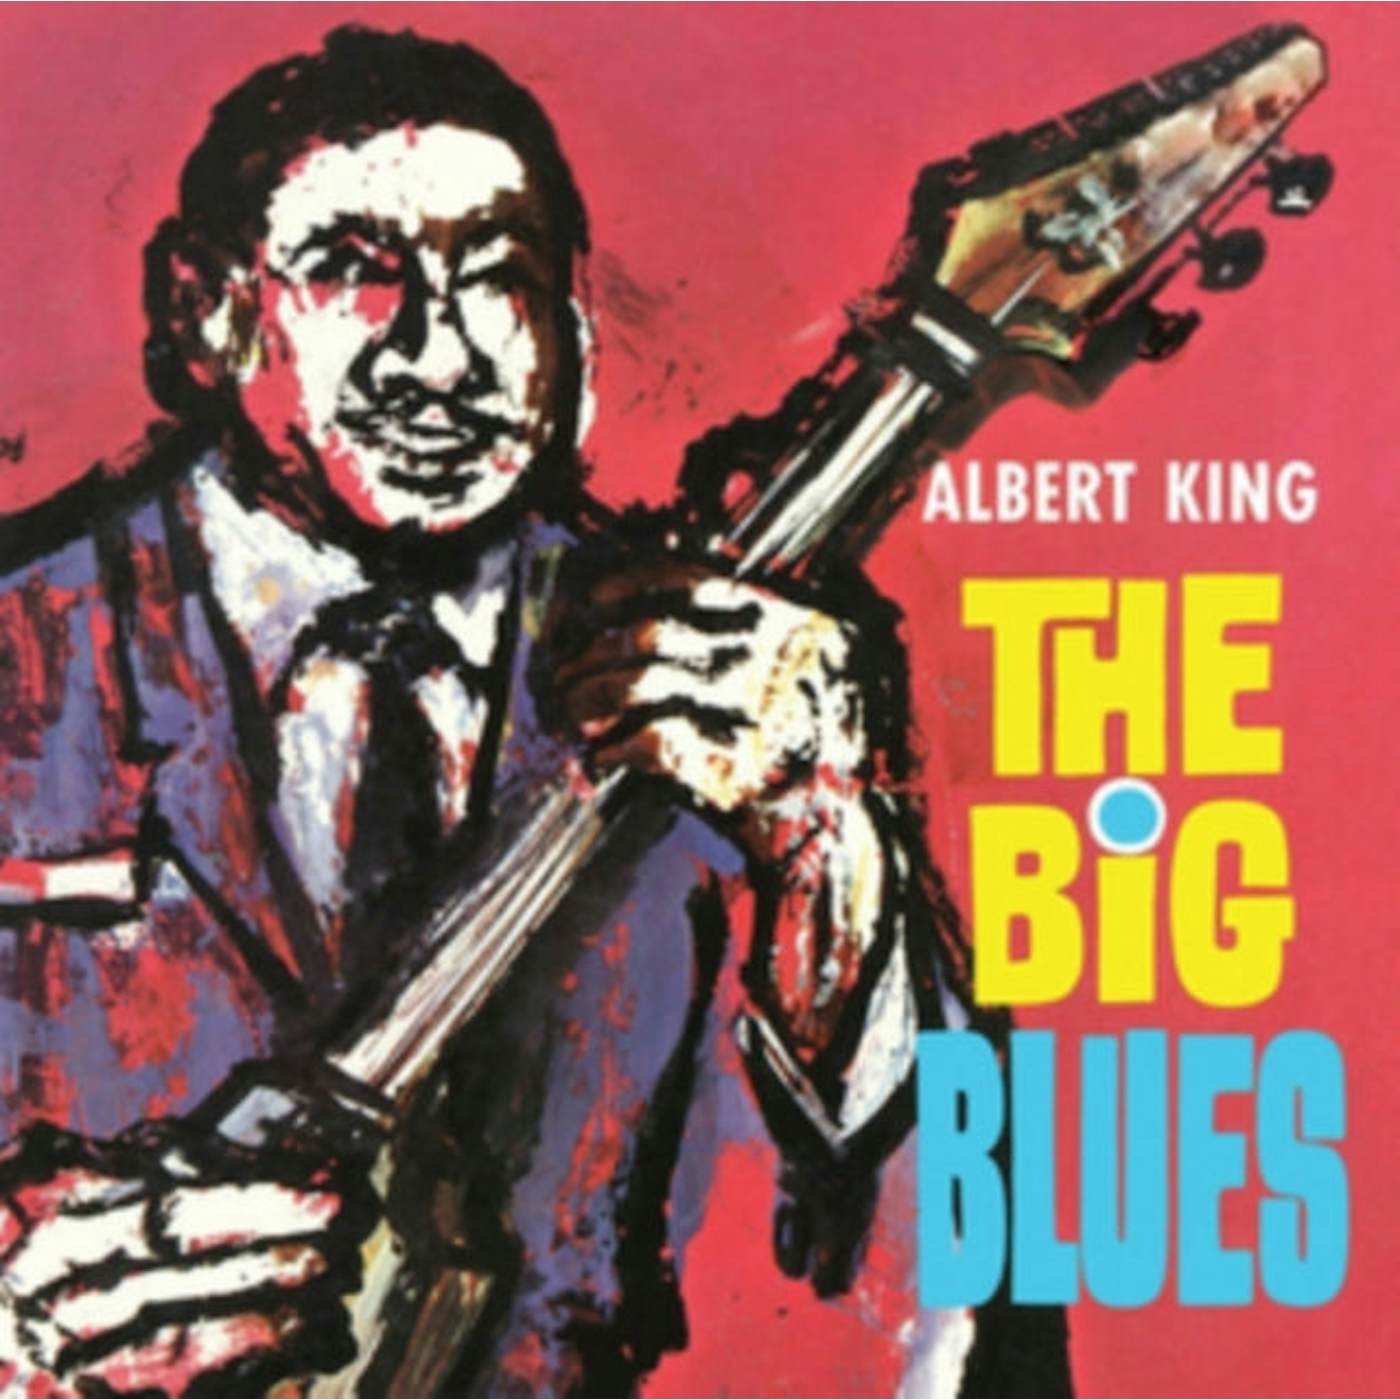 Albert King CD - Big Blues